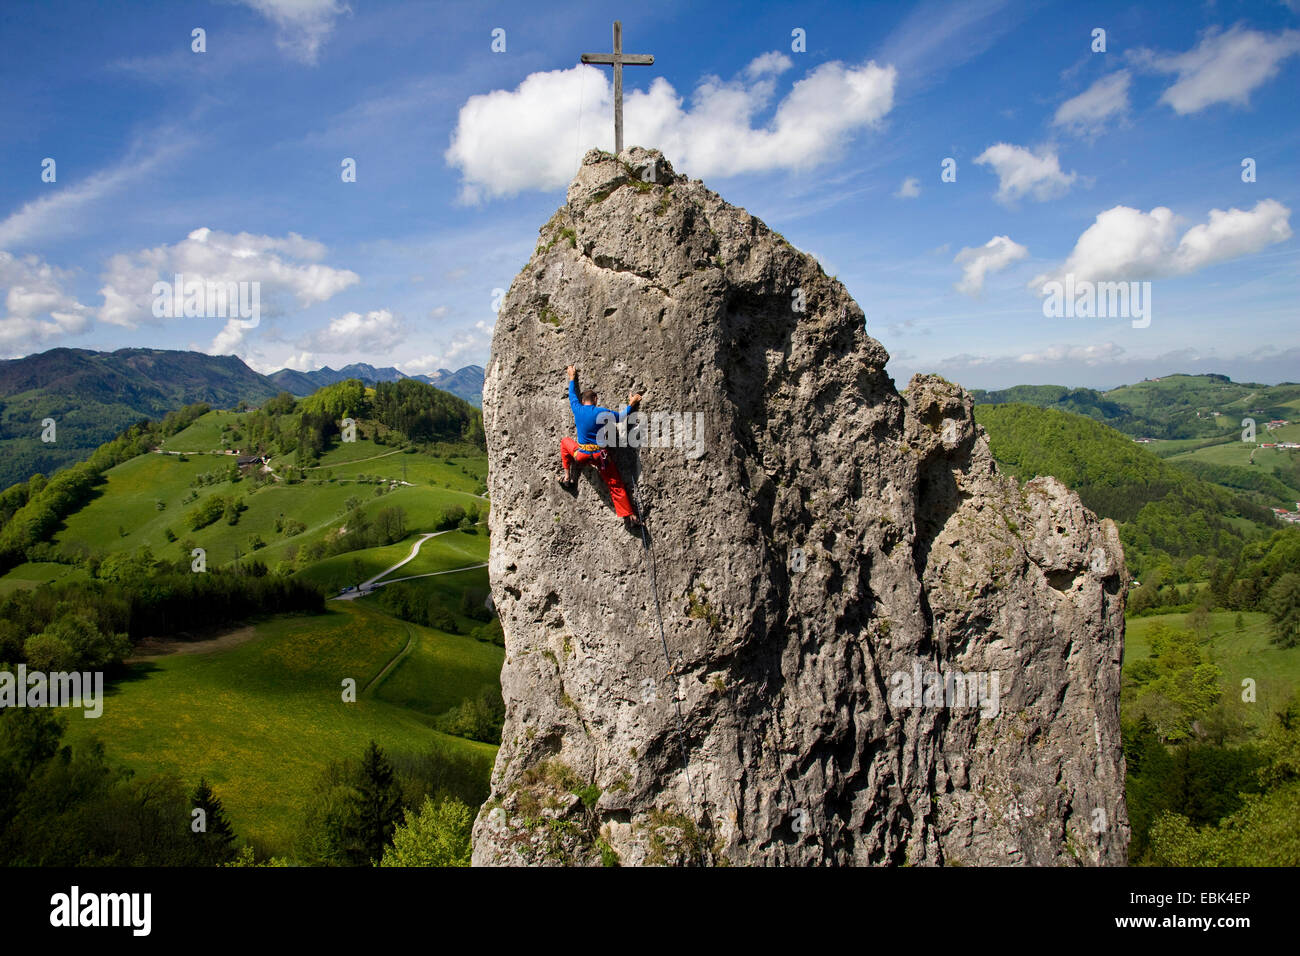 freeclimber at Sauzahn mountain in Ennstal, Austria, Upper Austria Stock Photo